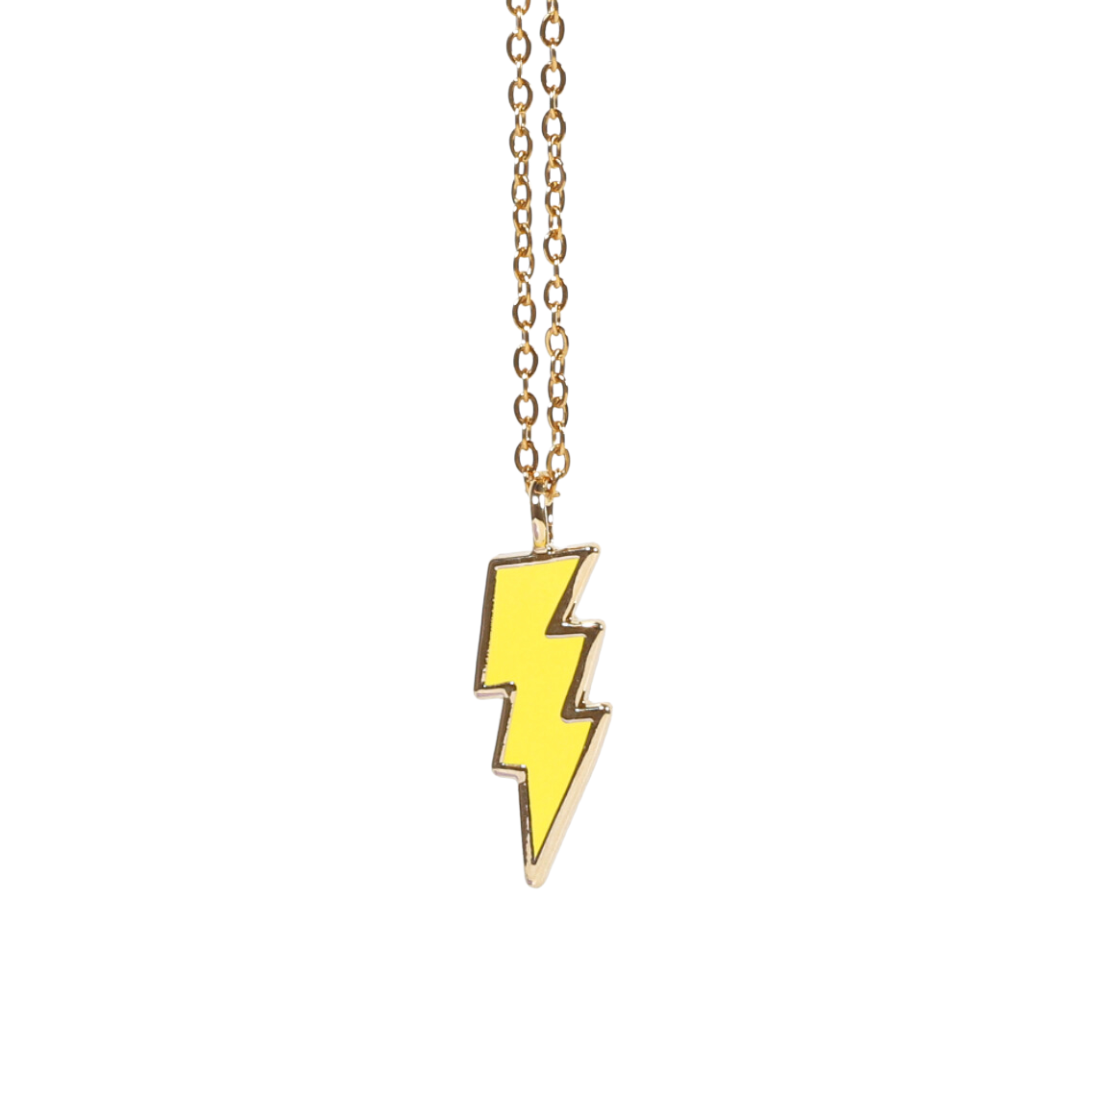 Lightning Bolt Pendant Necklace, 14k Gold Plated